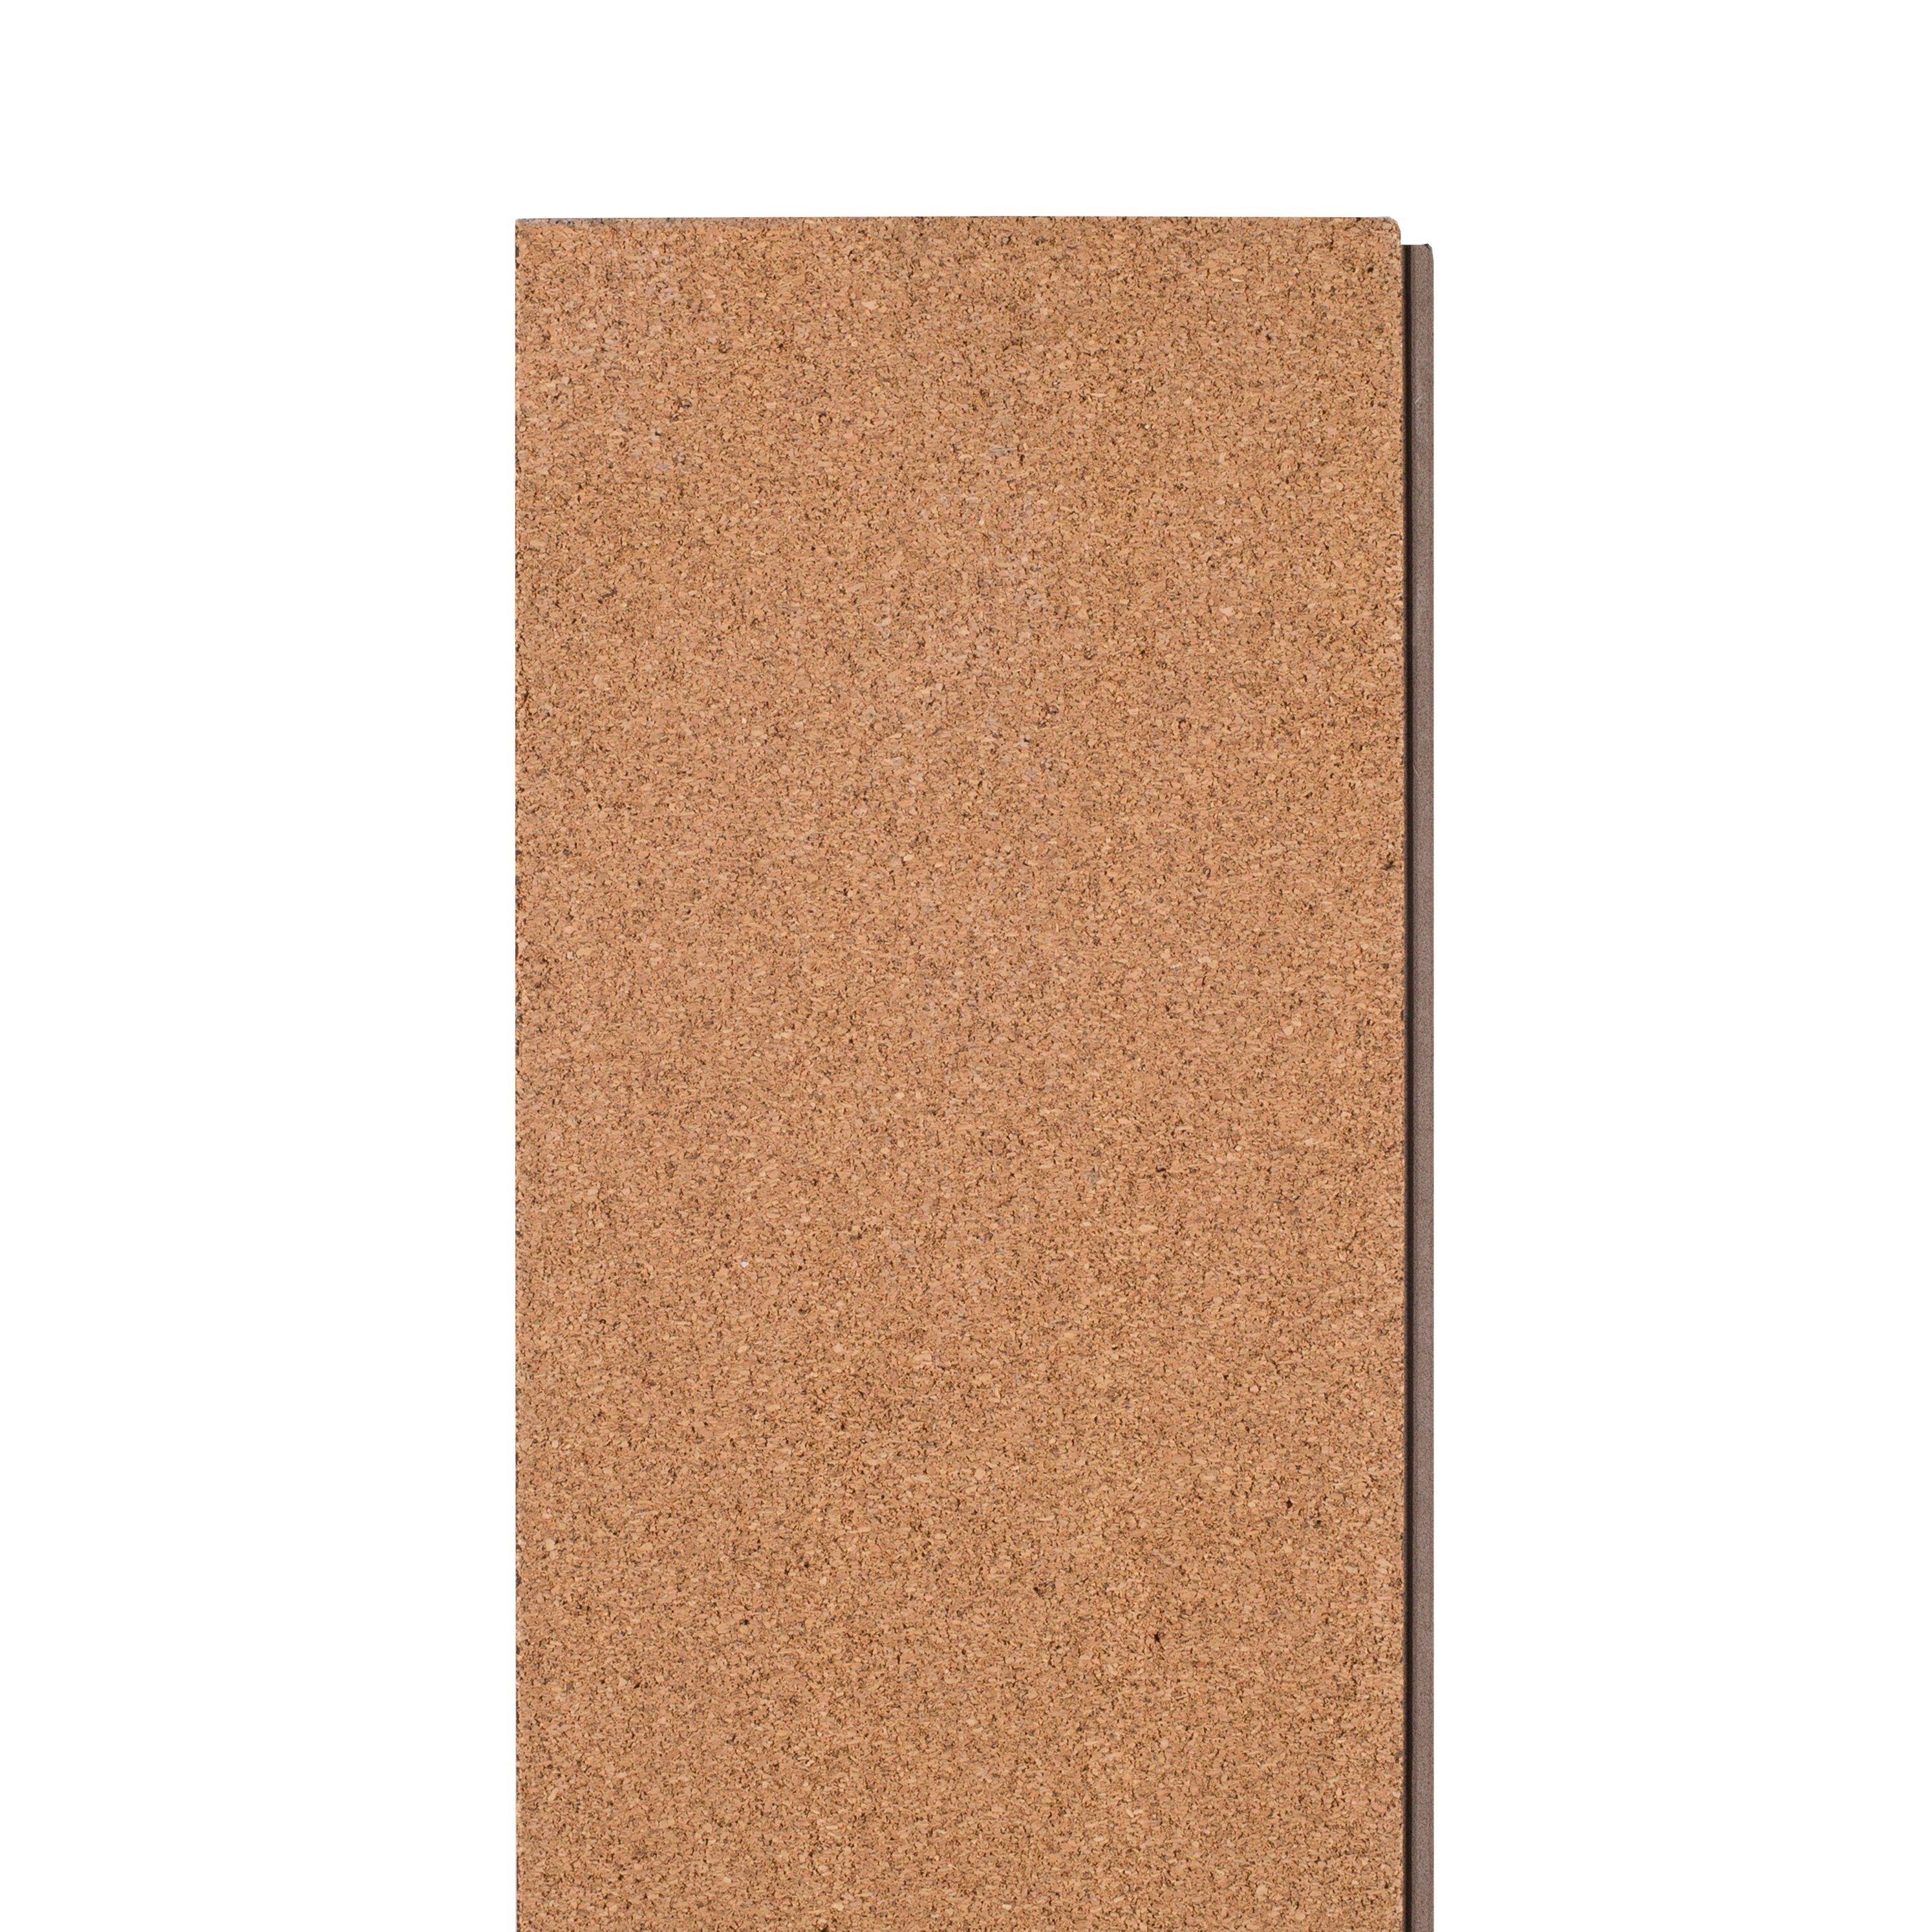 Chastain Creek Rigid Core Luxury Vinyl Plank - Cork Back